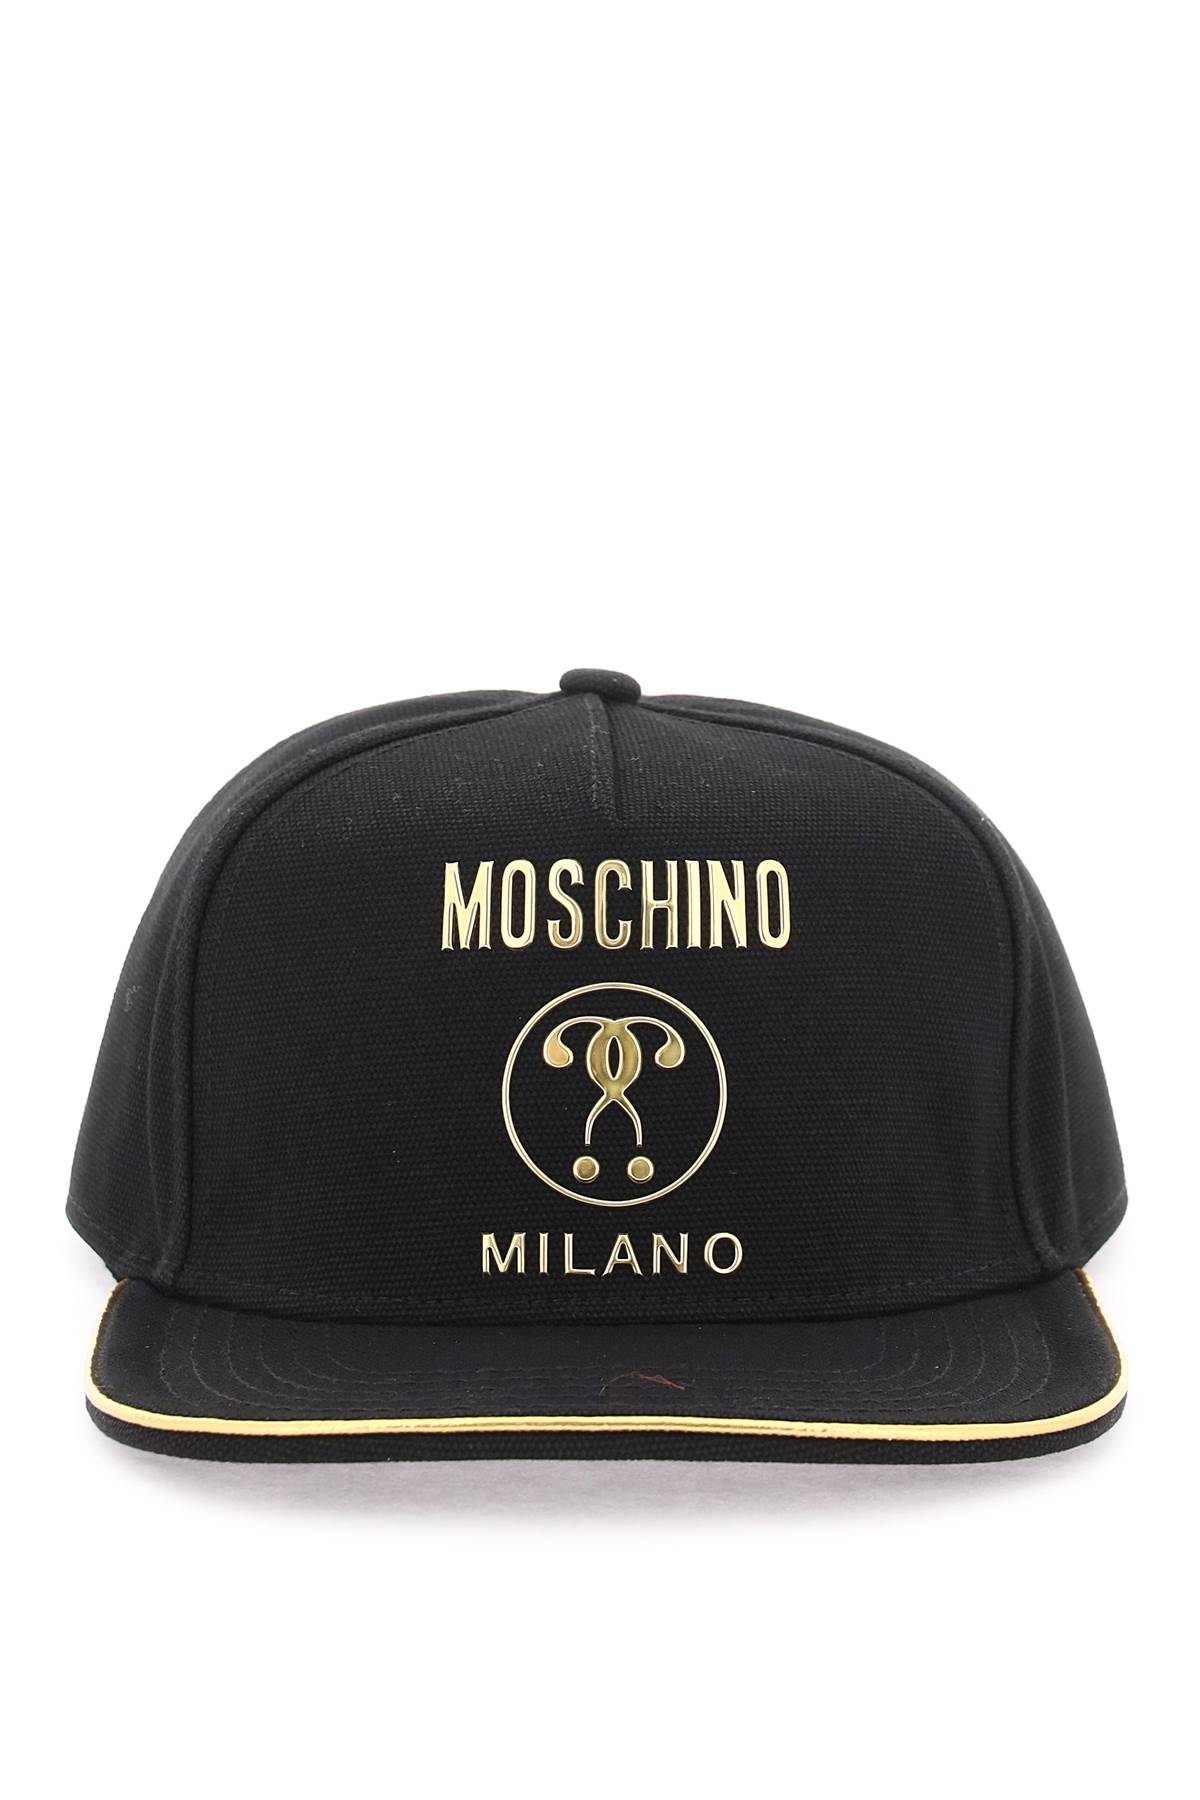 MOSCHINO BASEBALL CAP WITH METAL LOGO